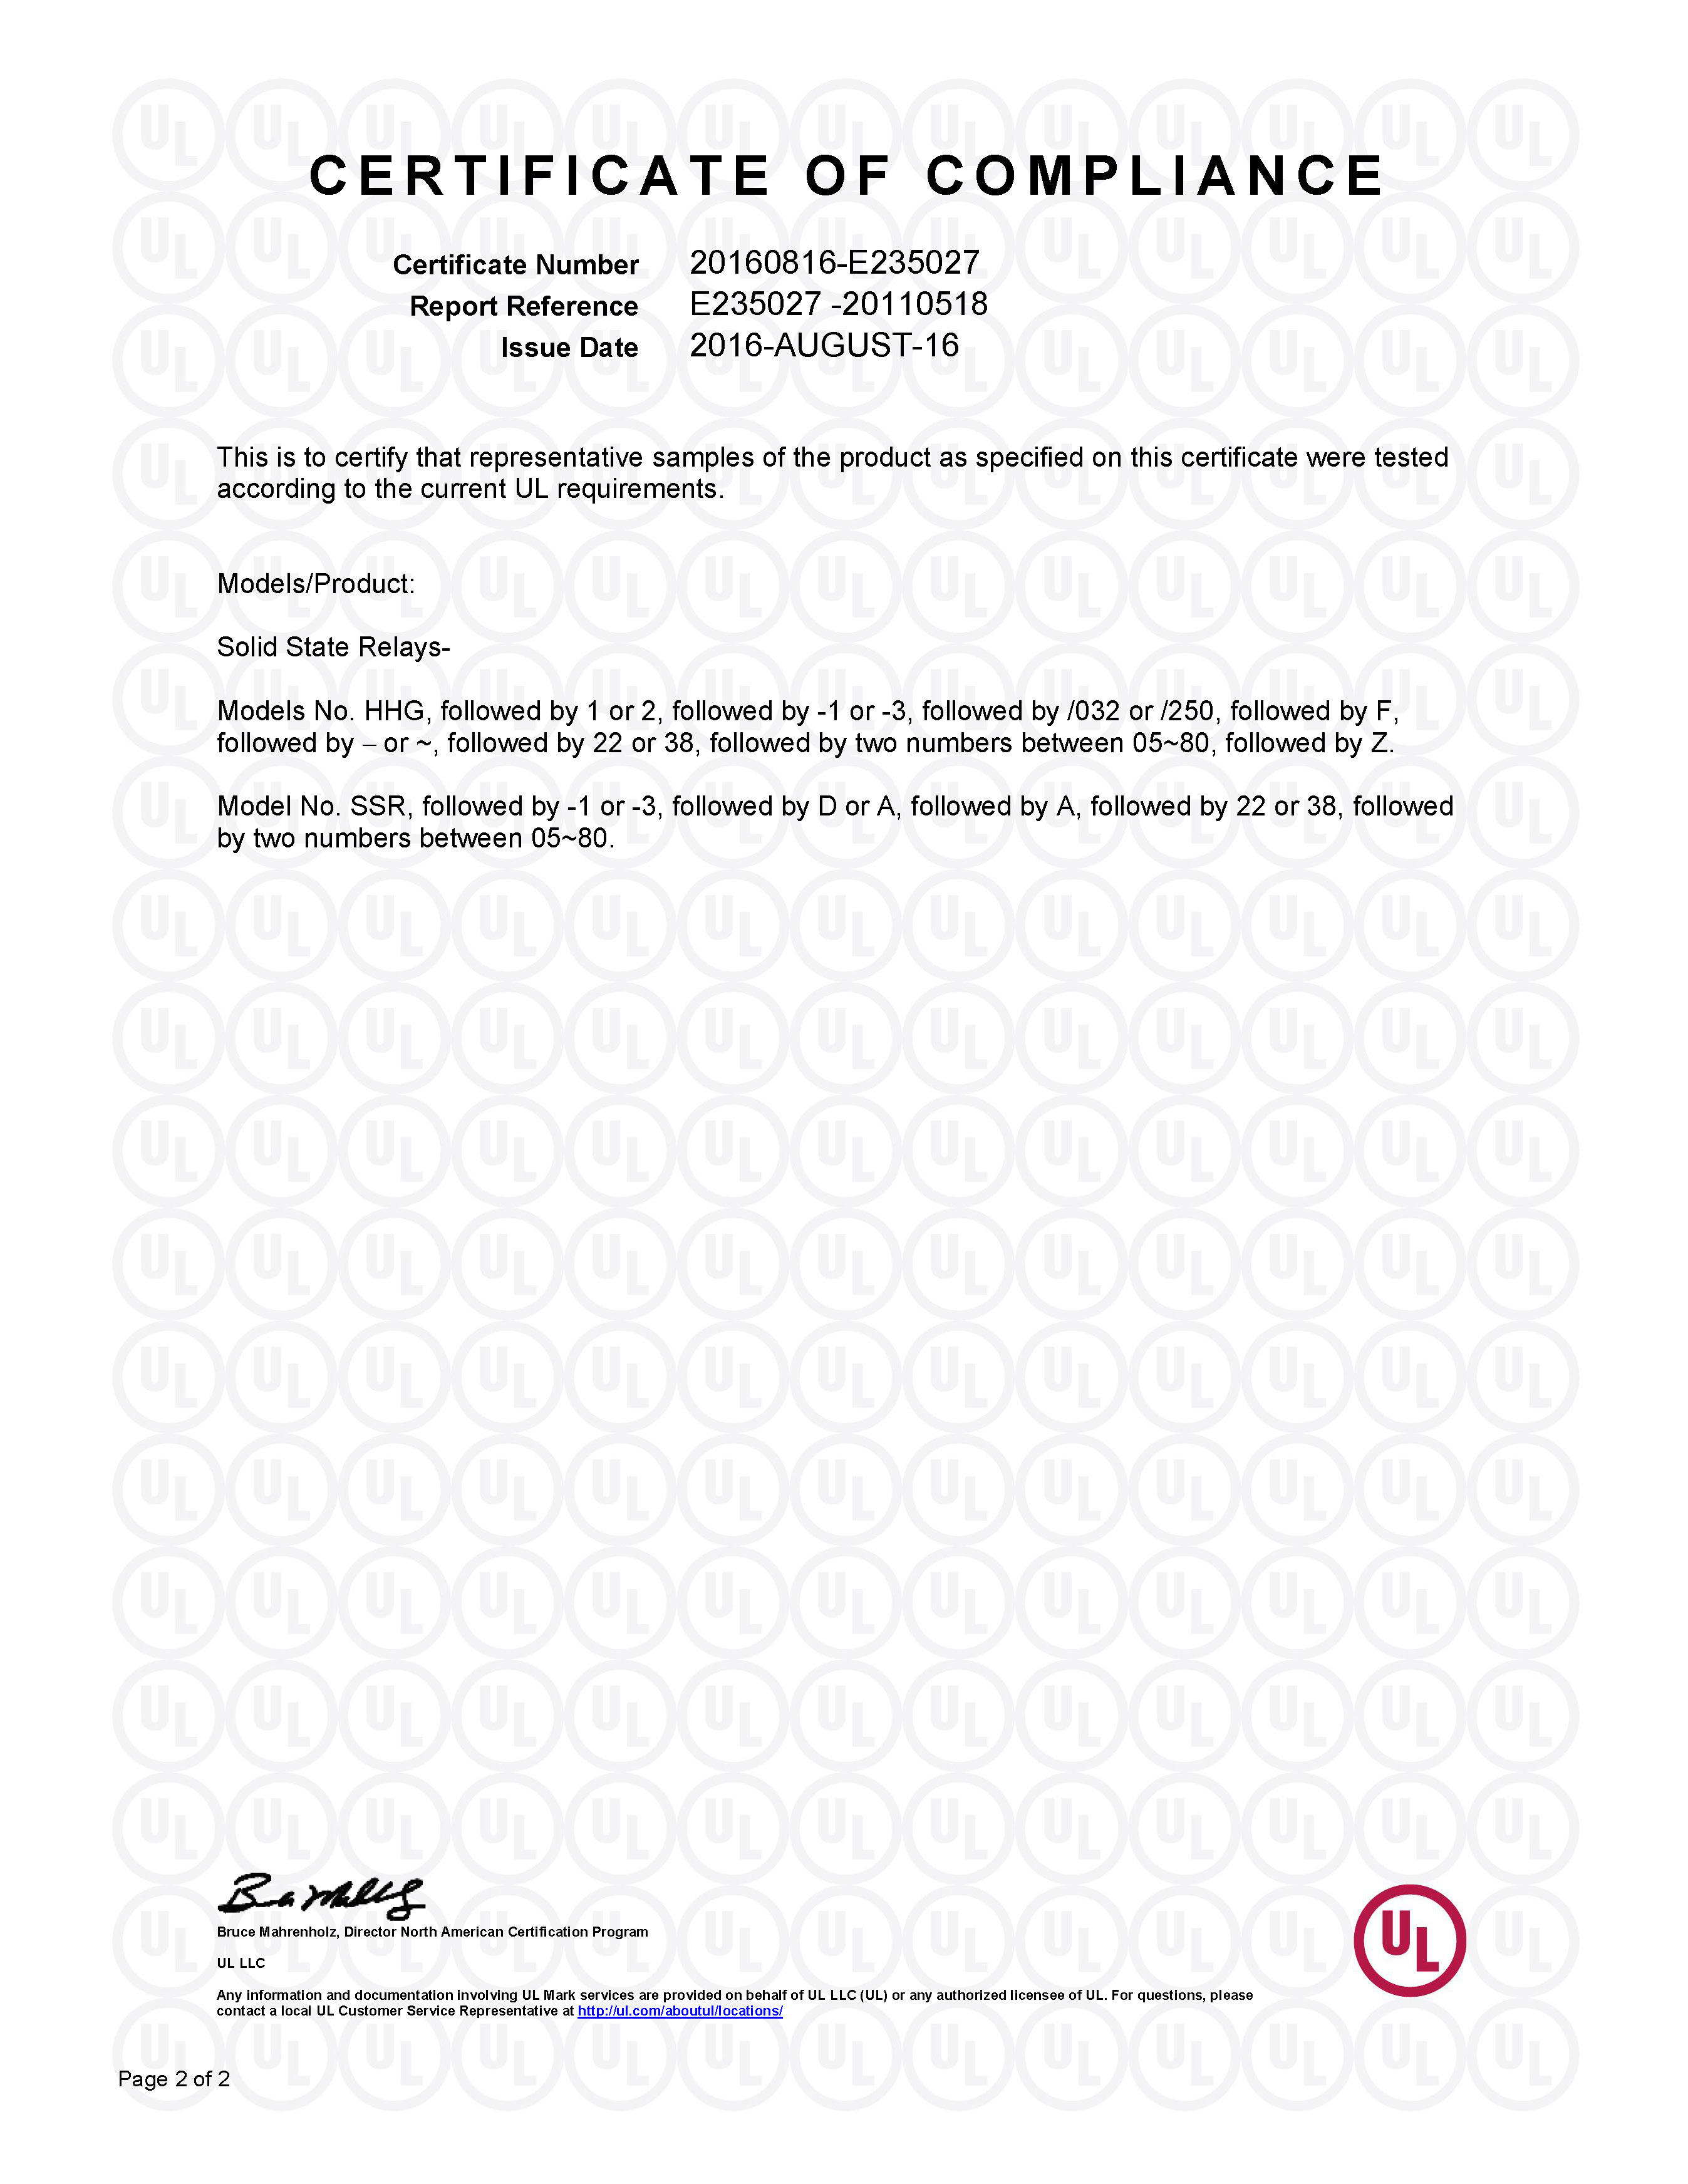 E235027-20110518-CertificateofCompliance_页面_2